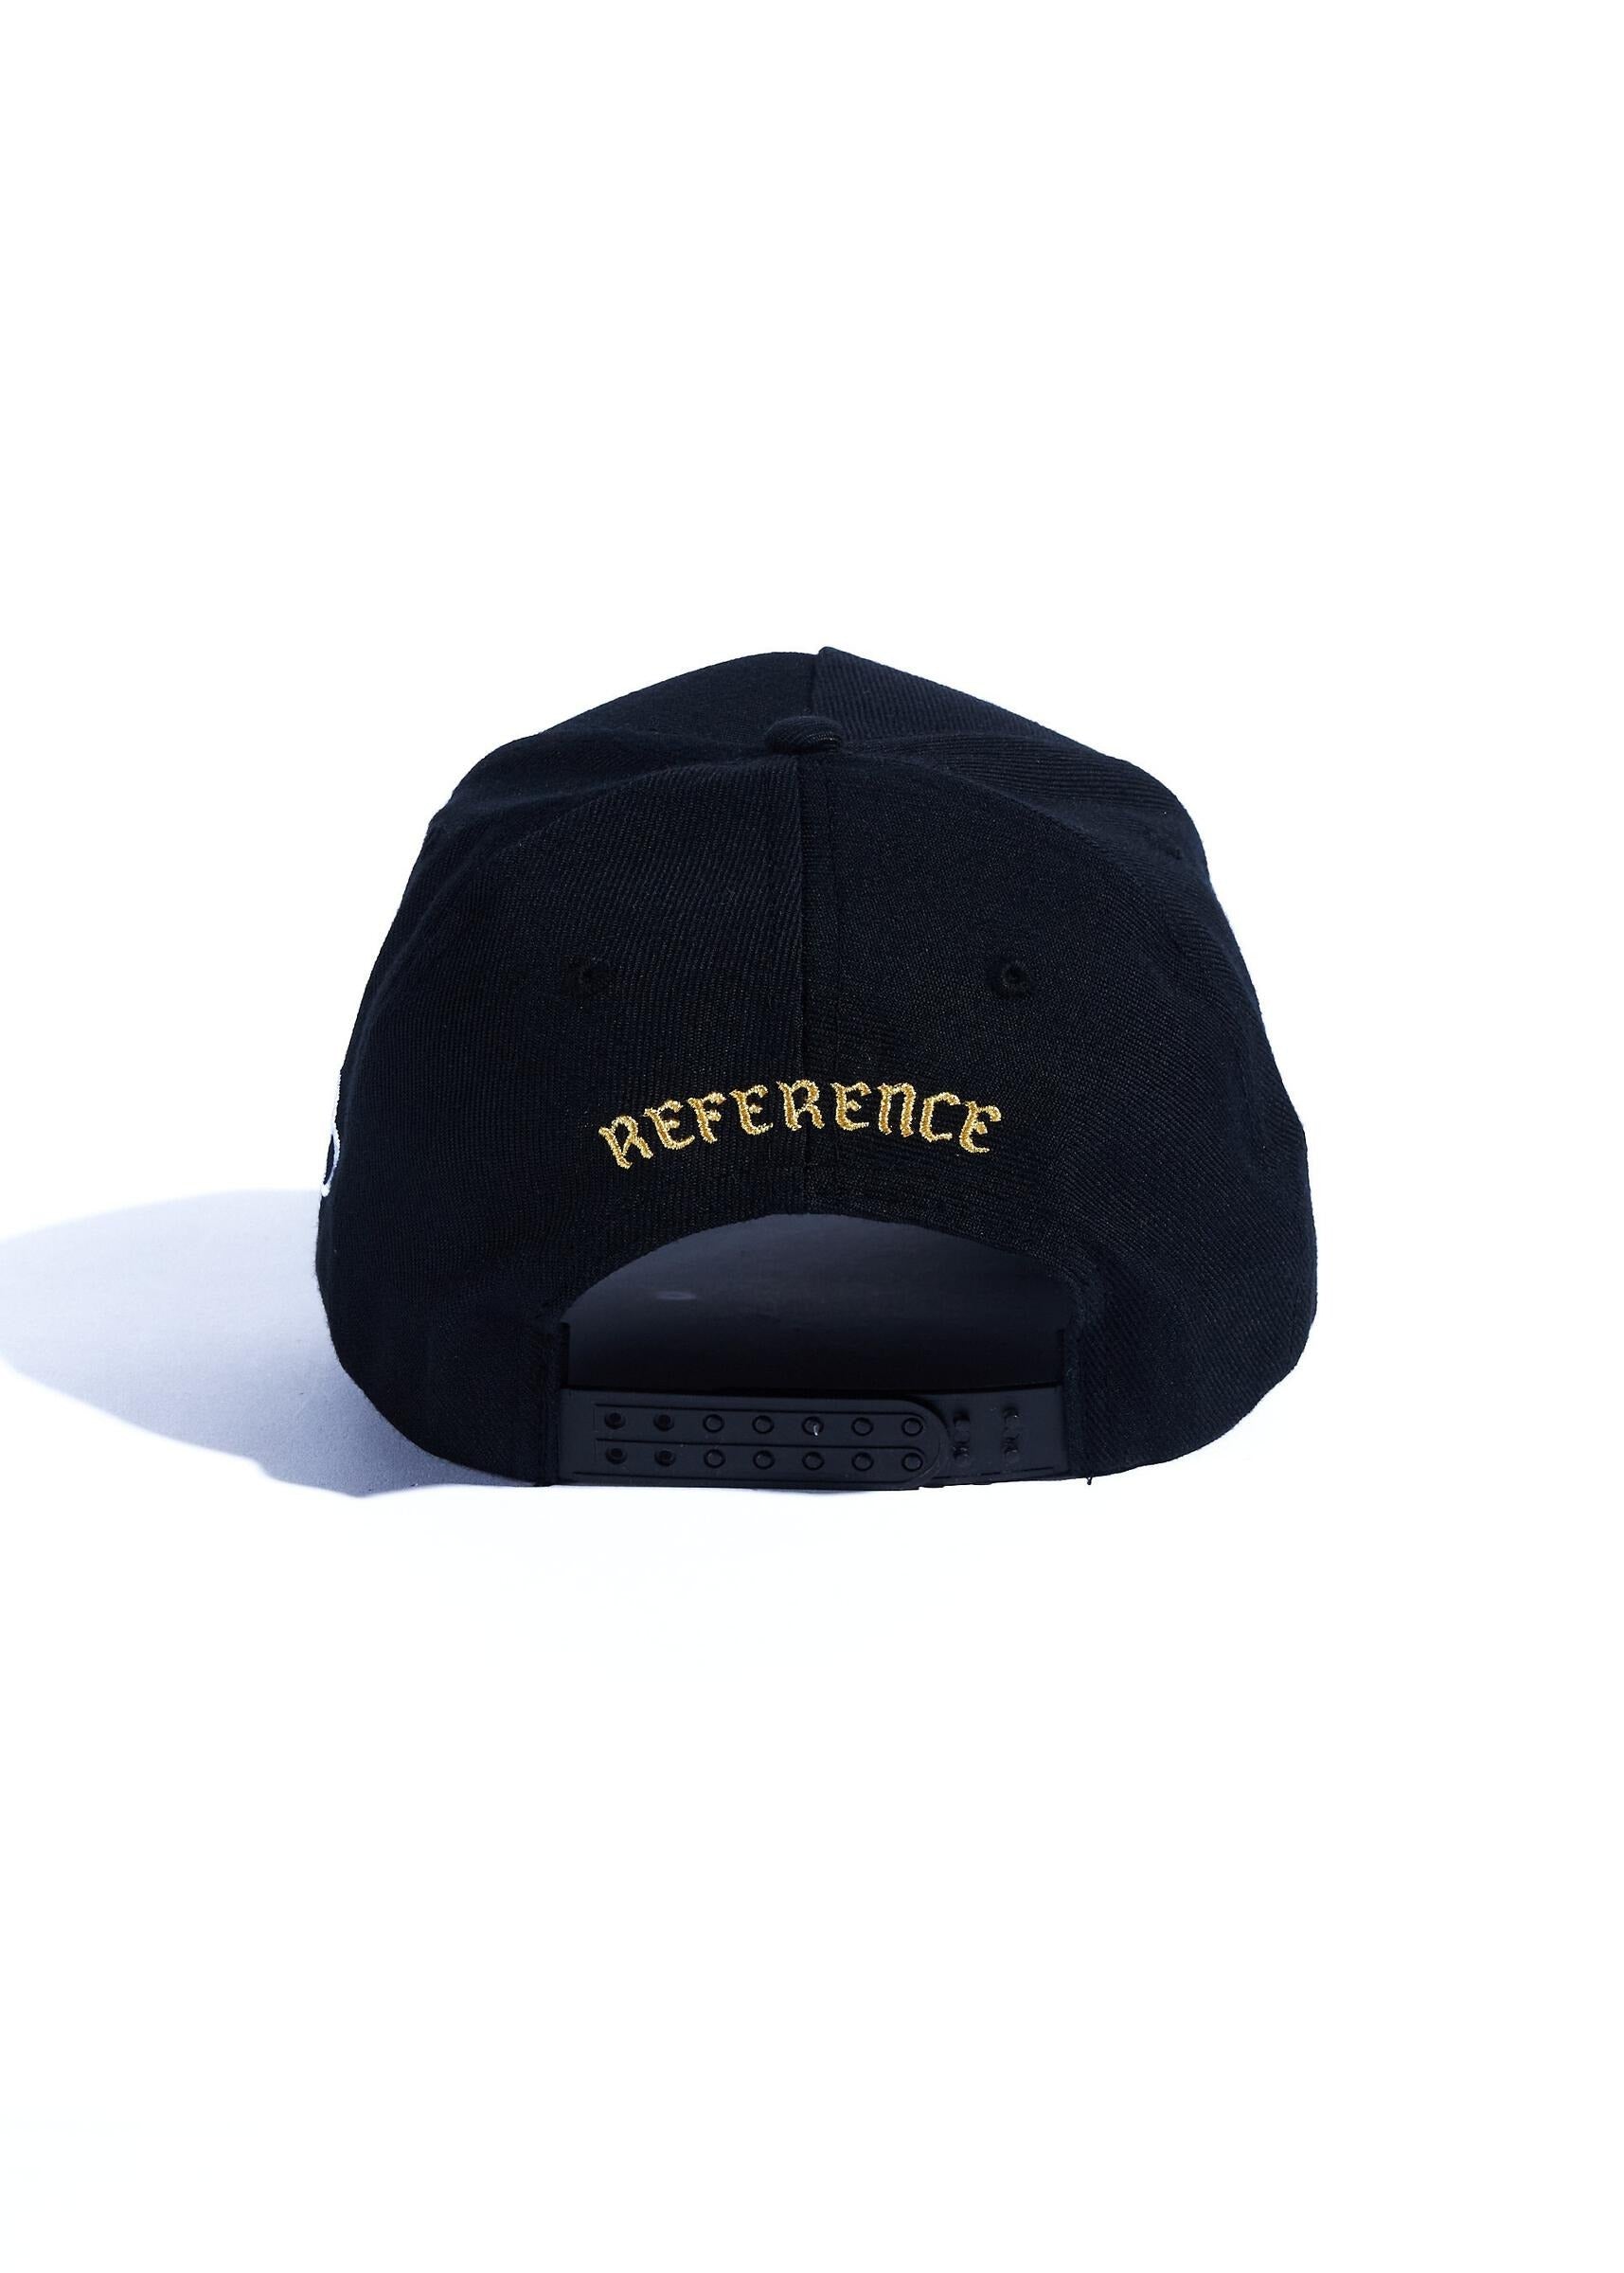 Reference Snapback Hat - Stirates